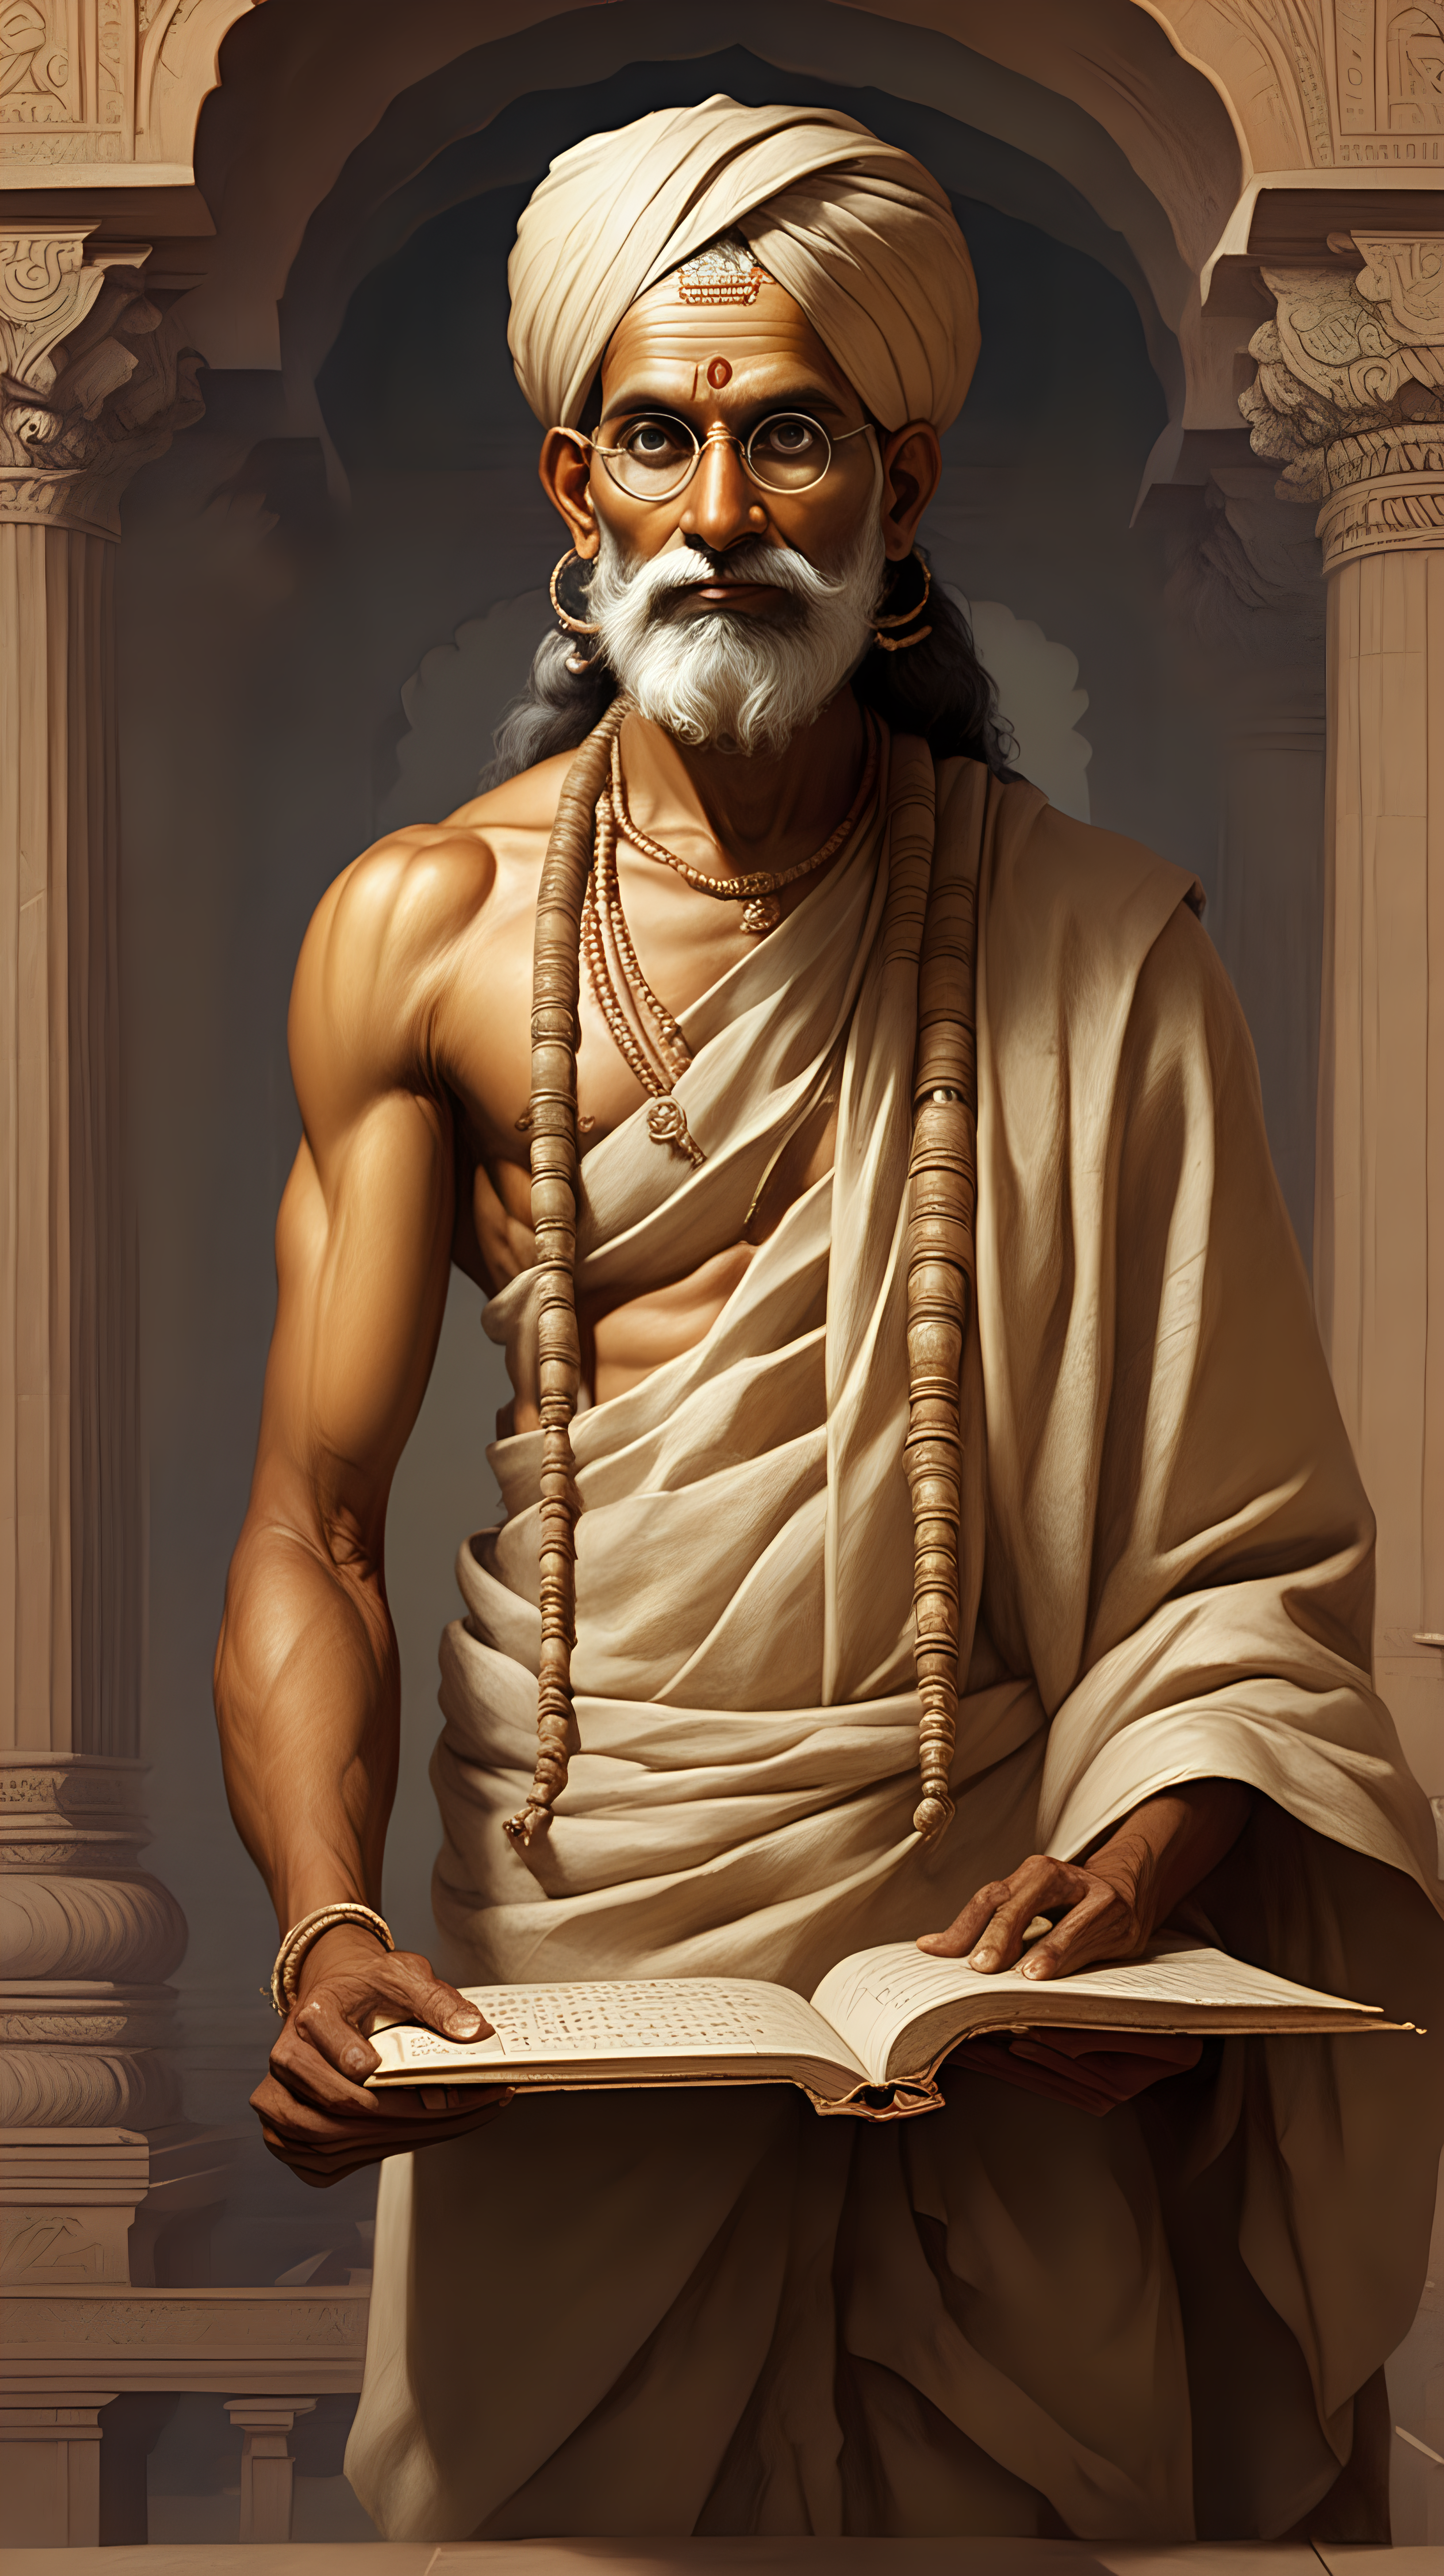 ancient Indian mathematician